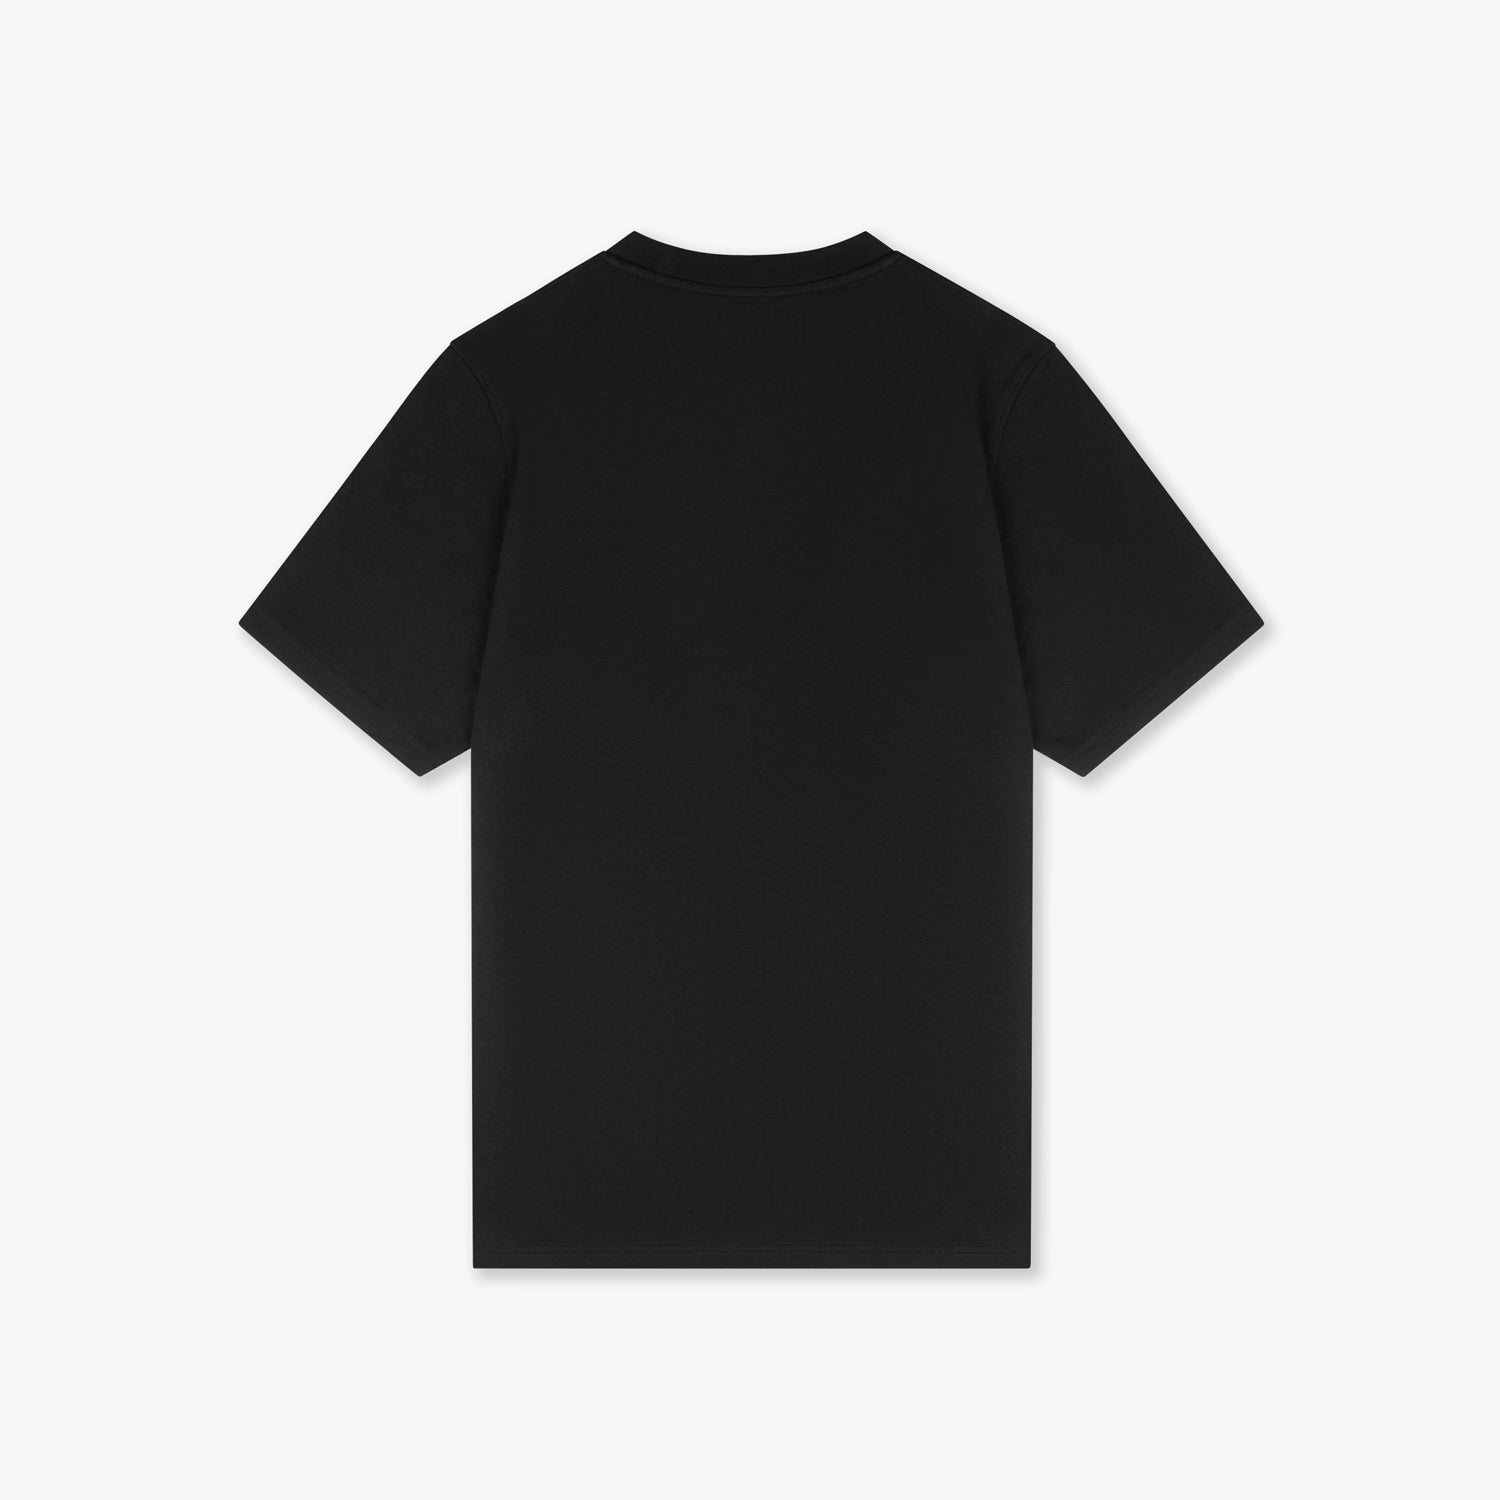 Croyez Fiercly Protective T-Shirt Zwart